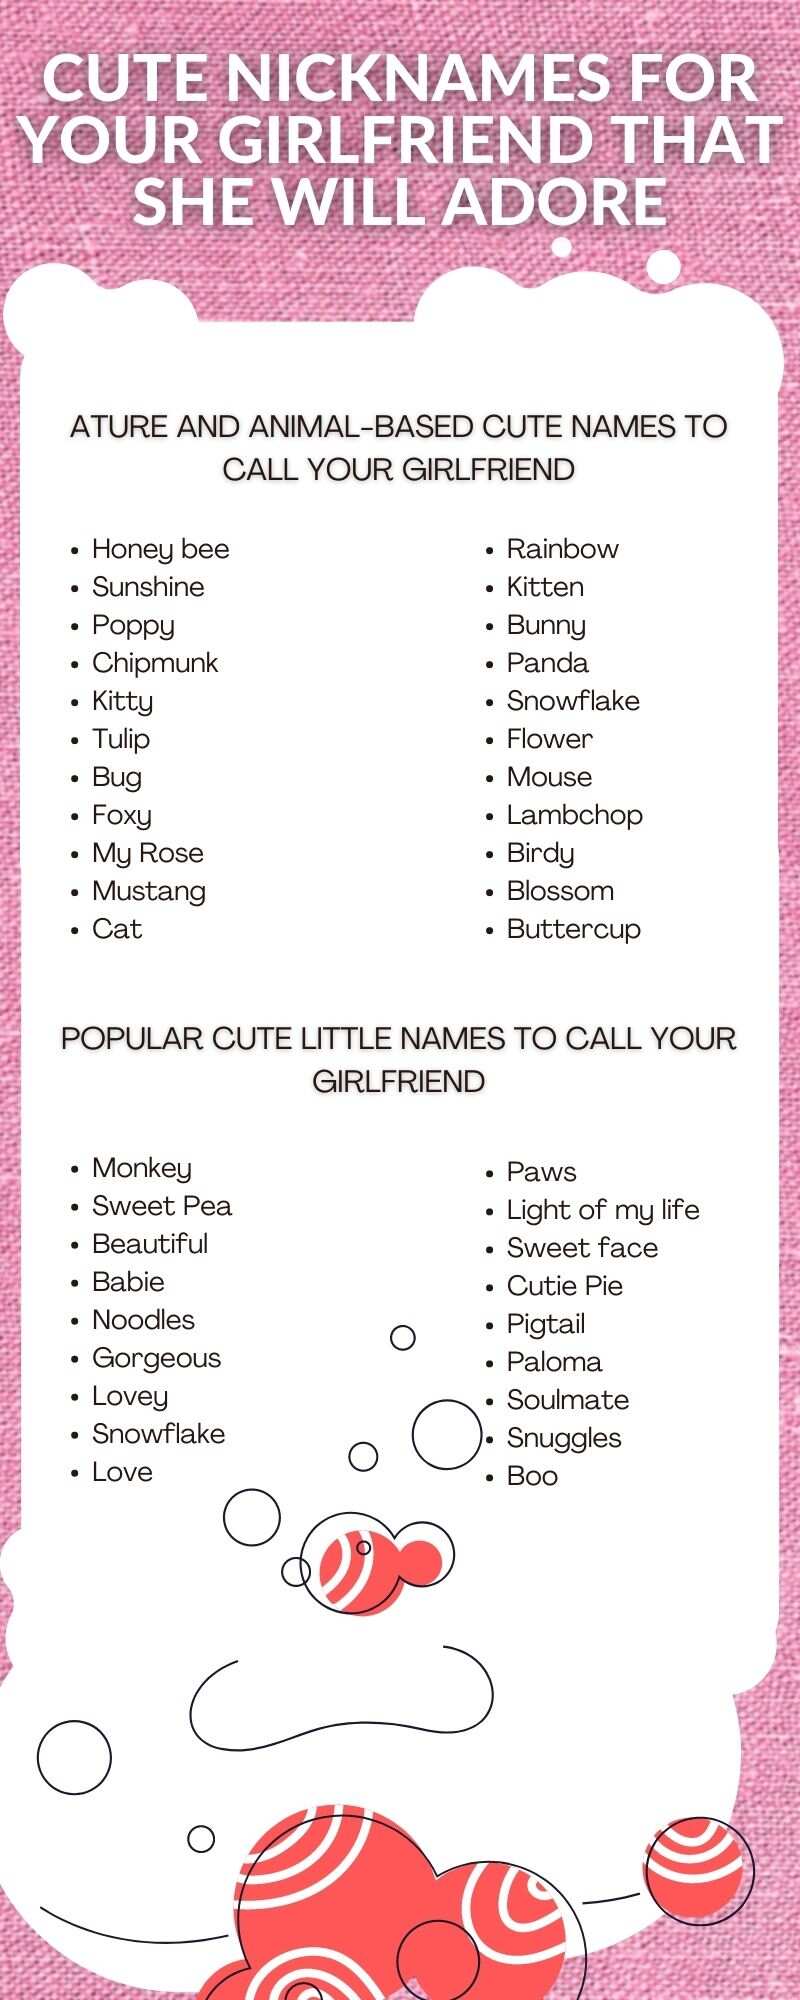 For nicknames boyfriend list 450+ Sexy